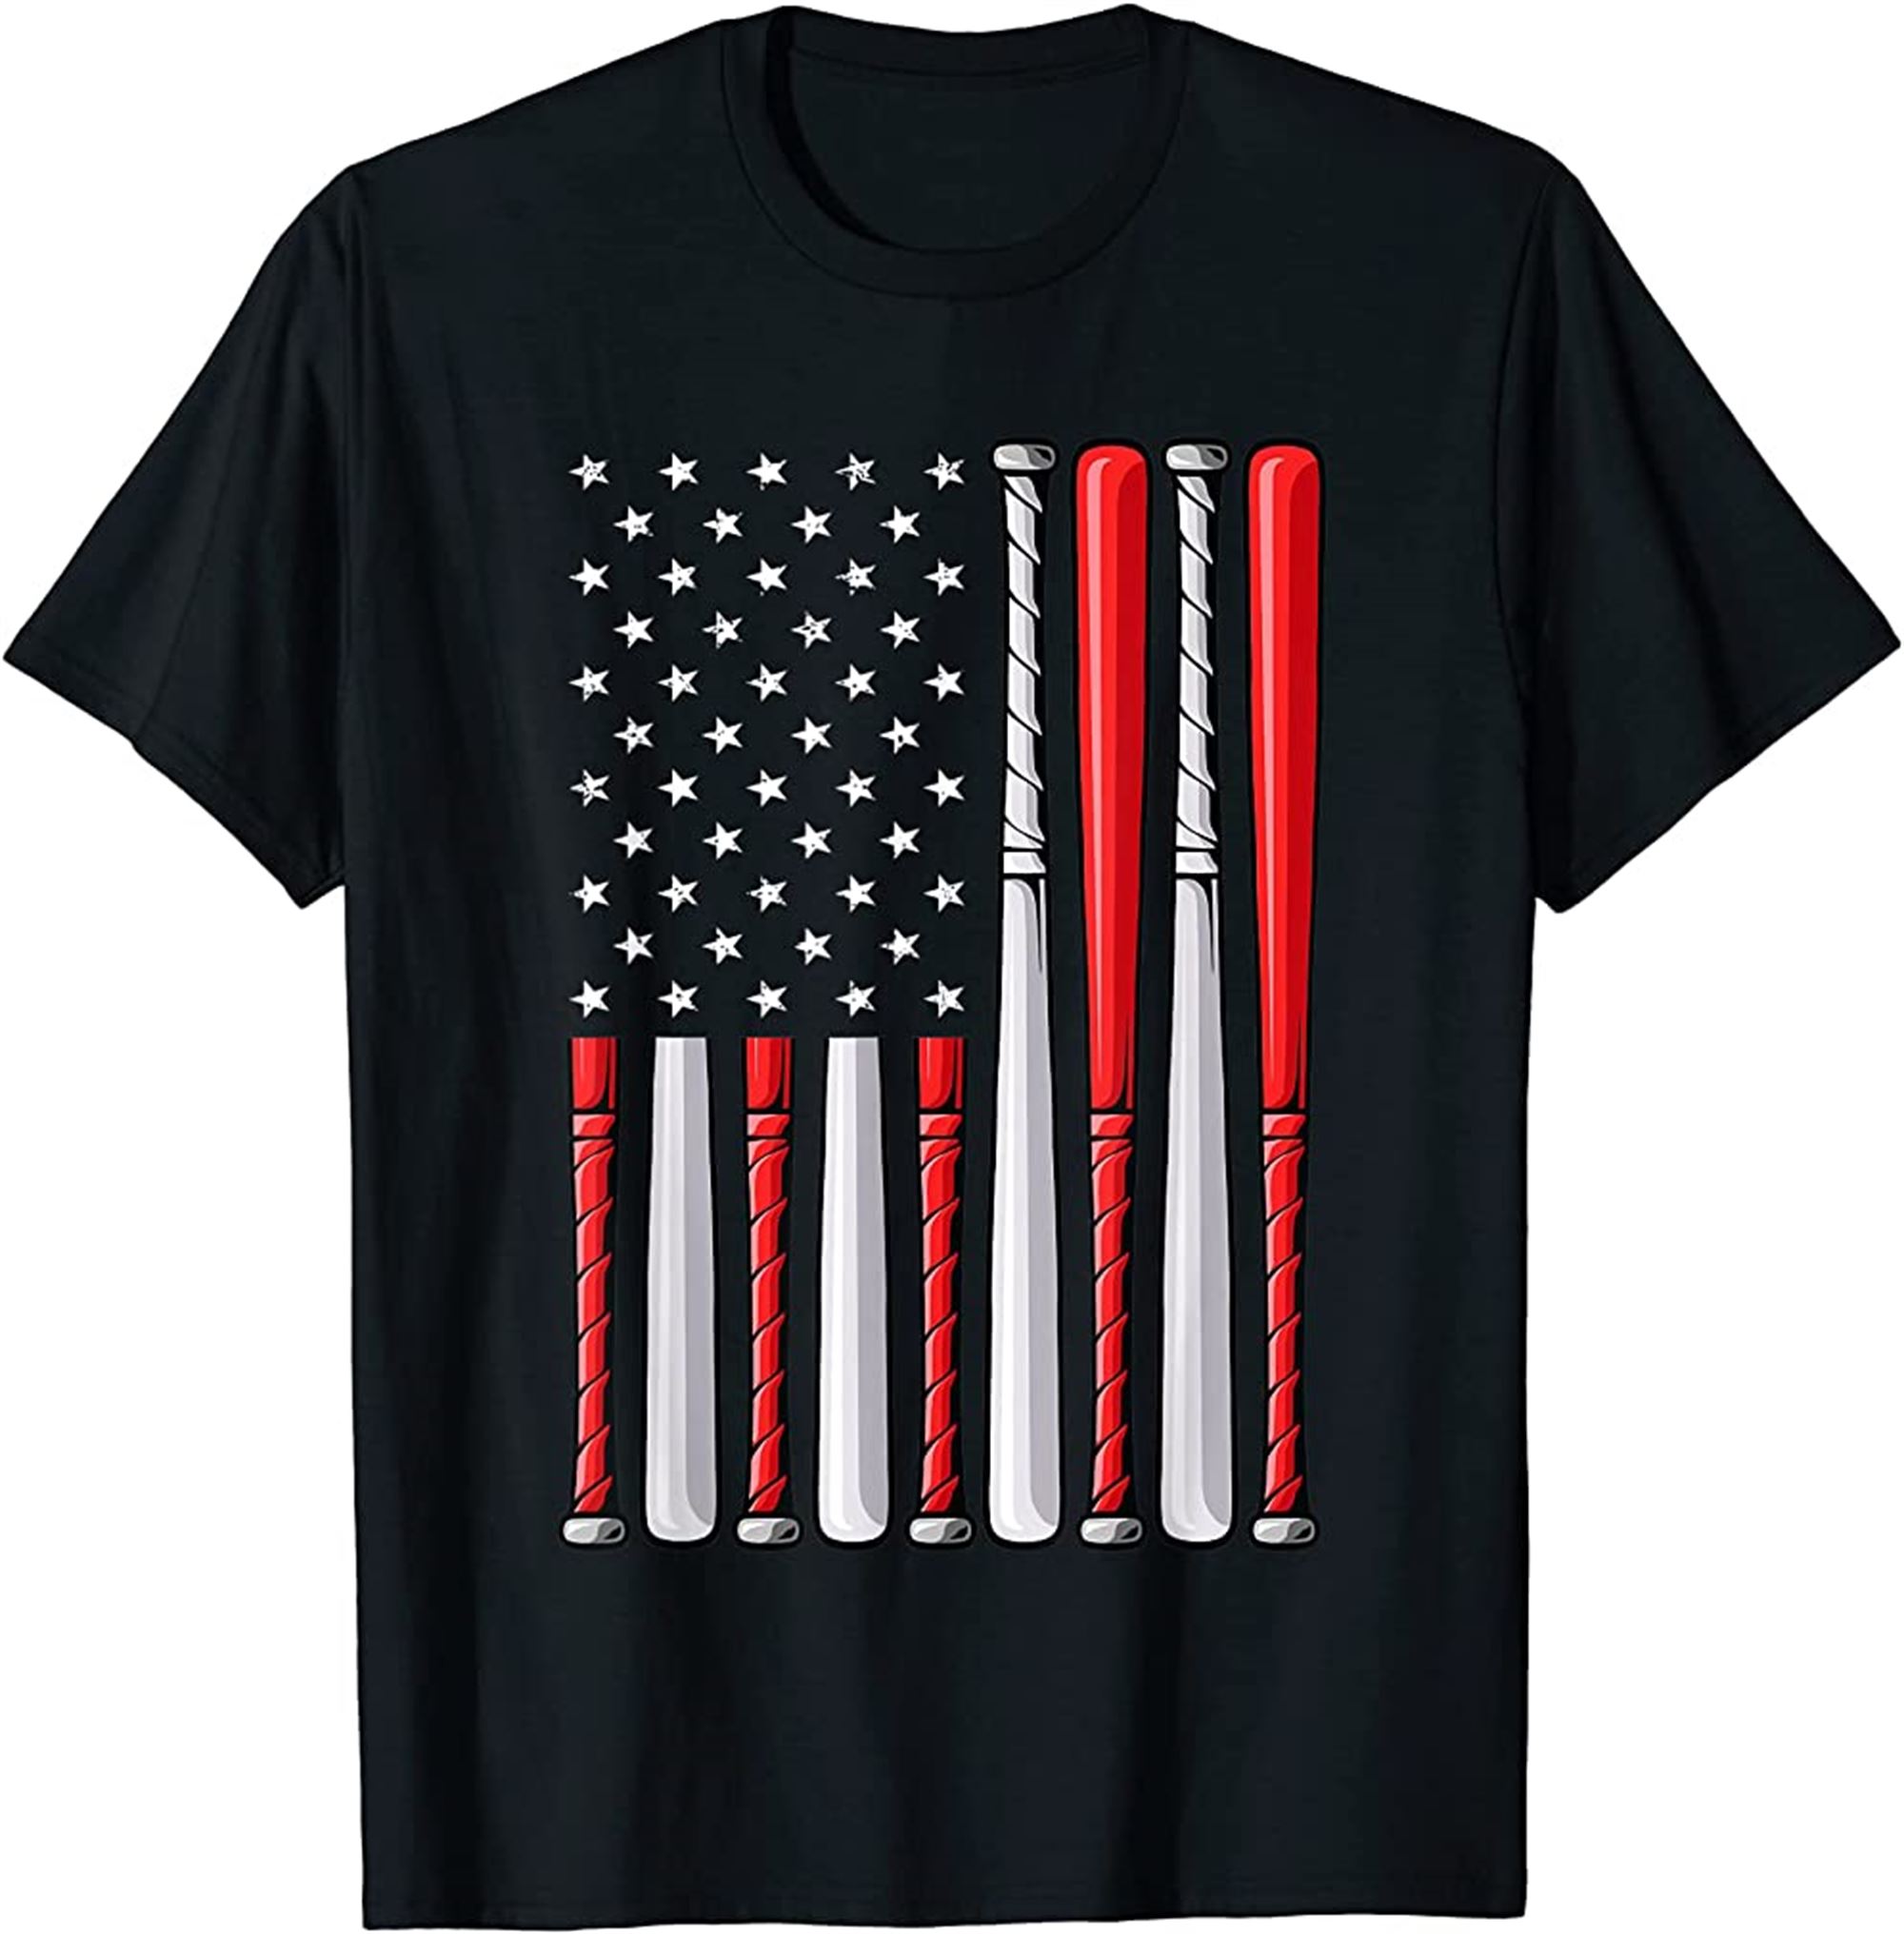 July 4th Baseball Apparel Softball Flag Shirt American Flag T-shirt Size Up To 5xl